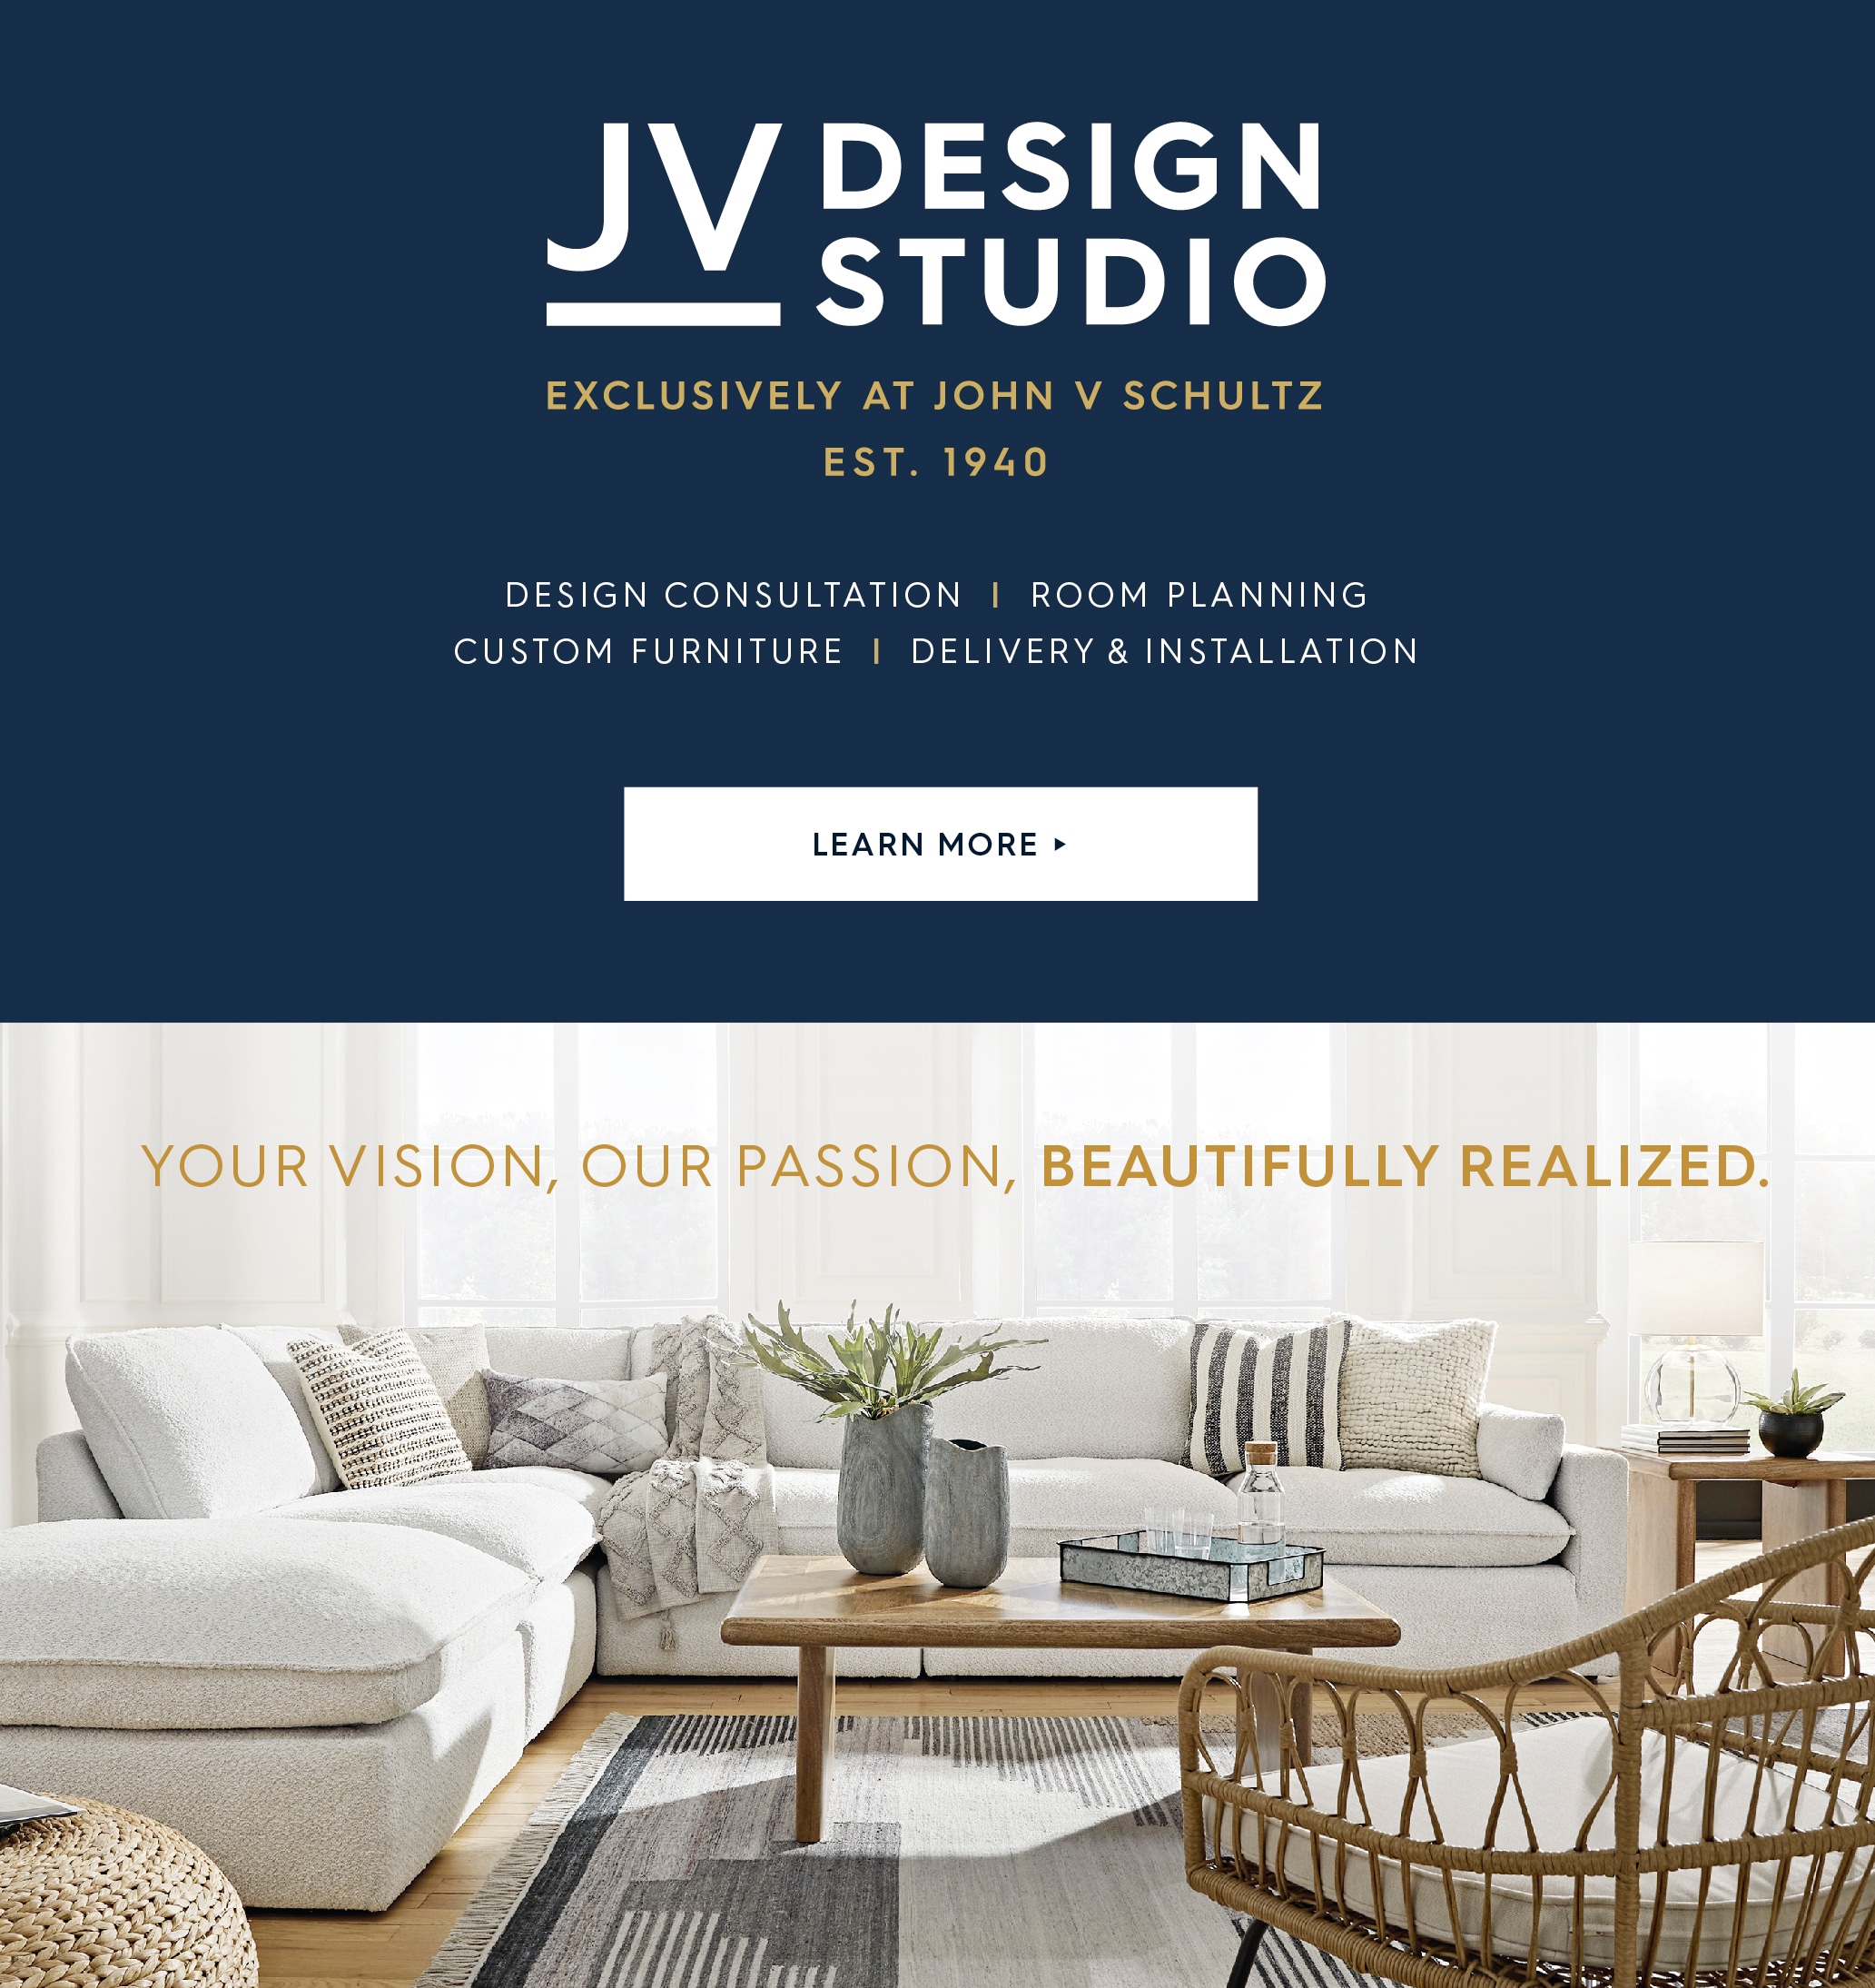 Explore JV Design Studio